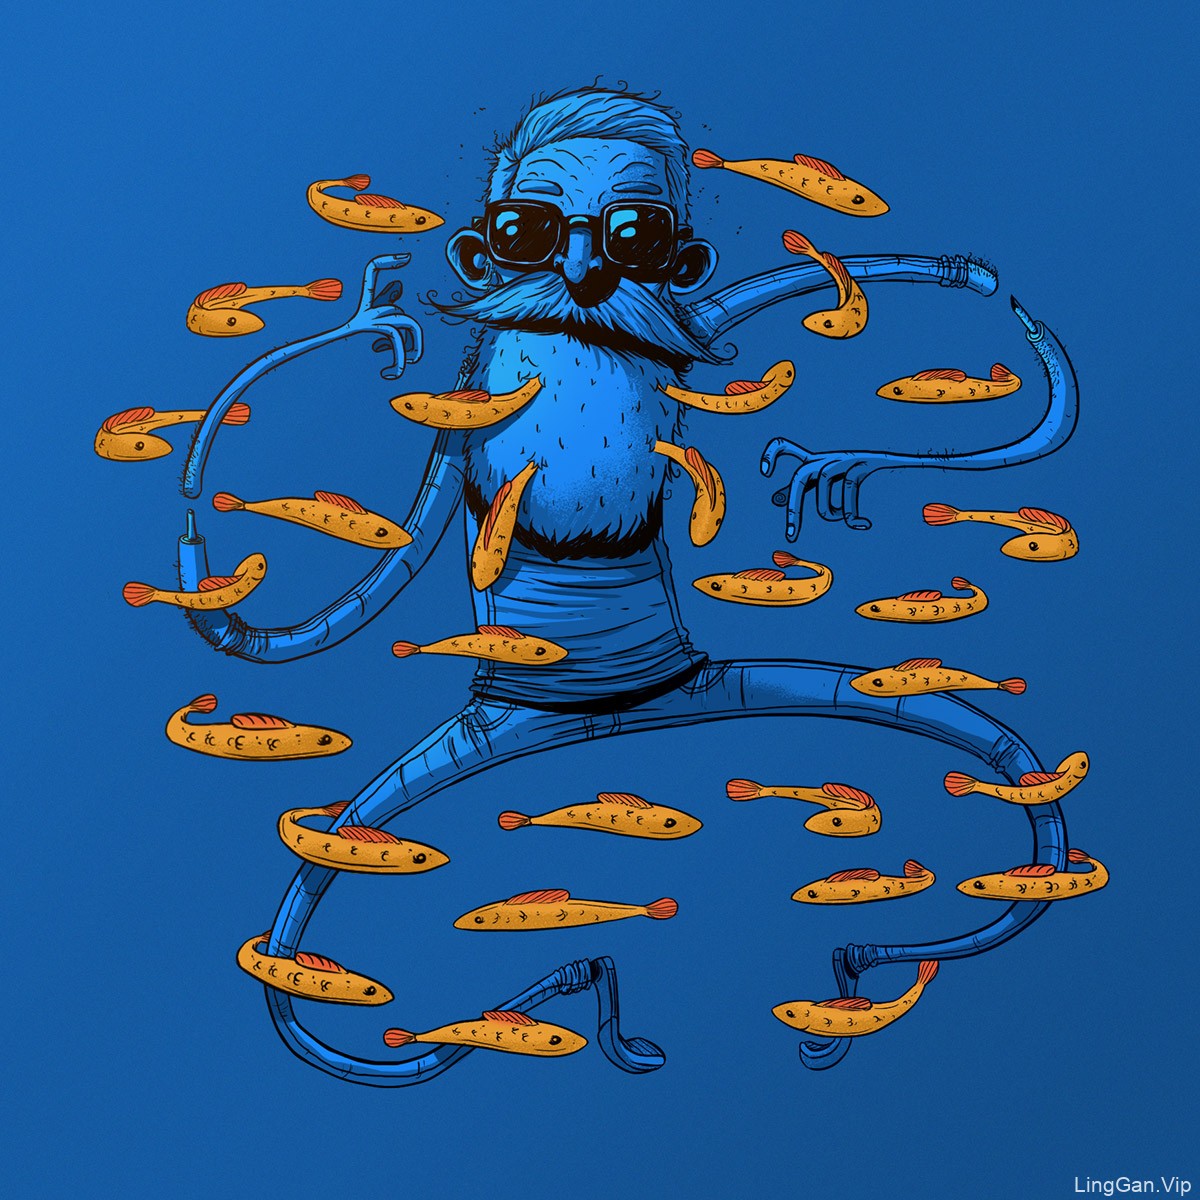 Fishes 冷色调的插图，希望你们喜欢